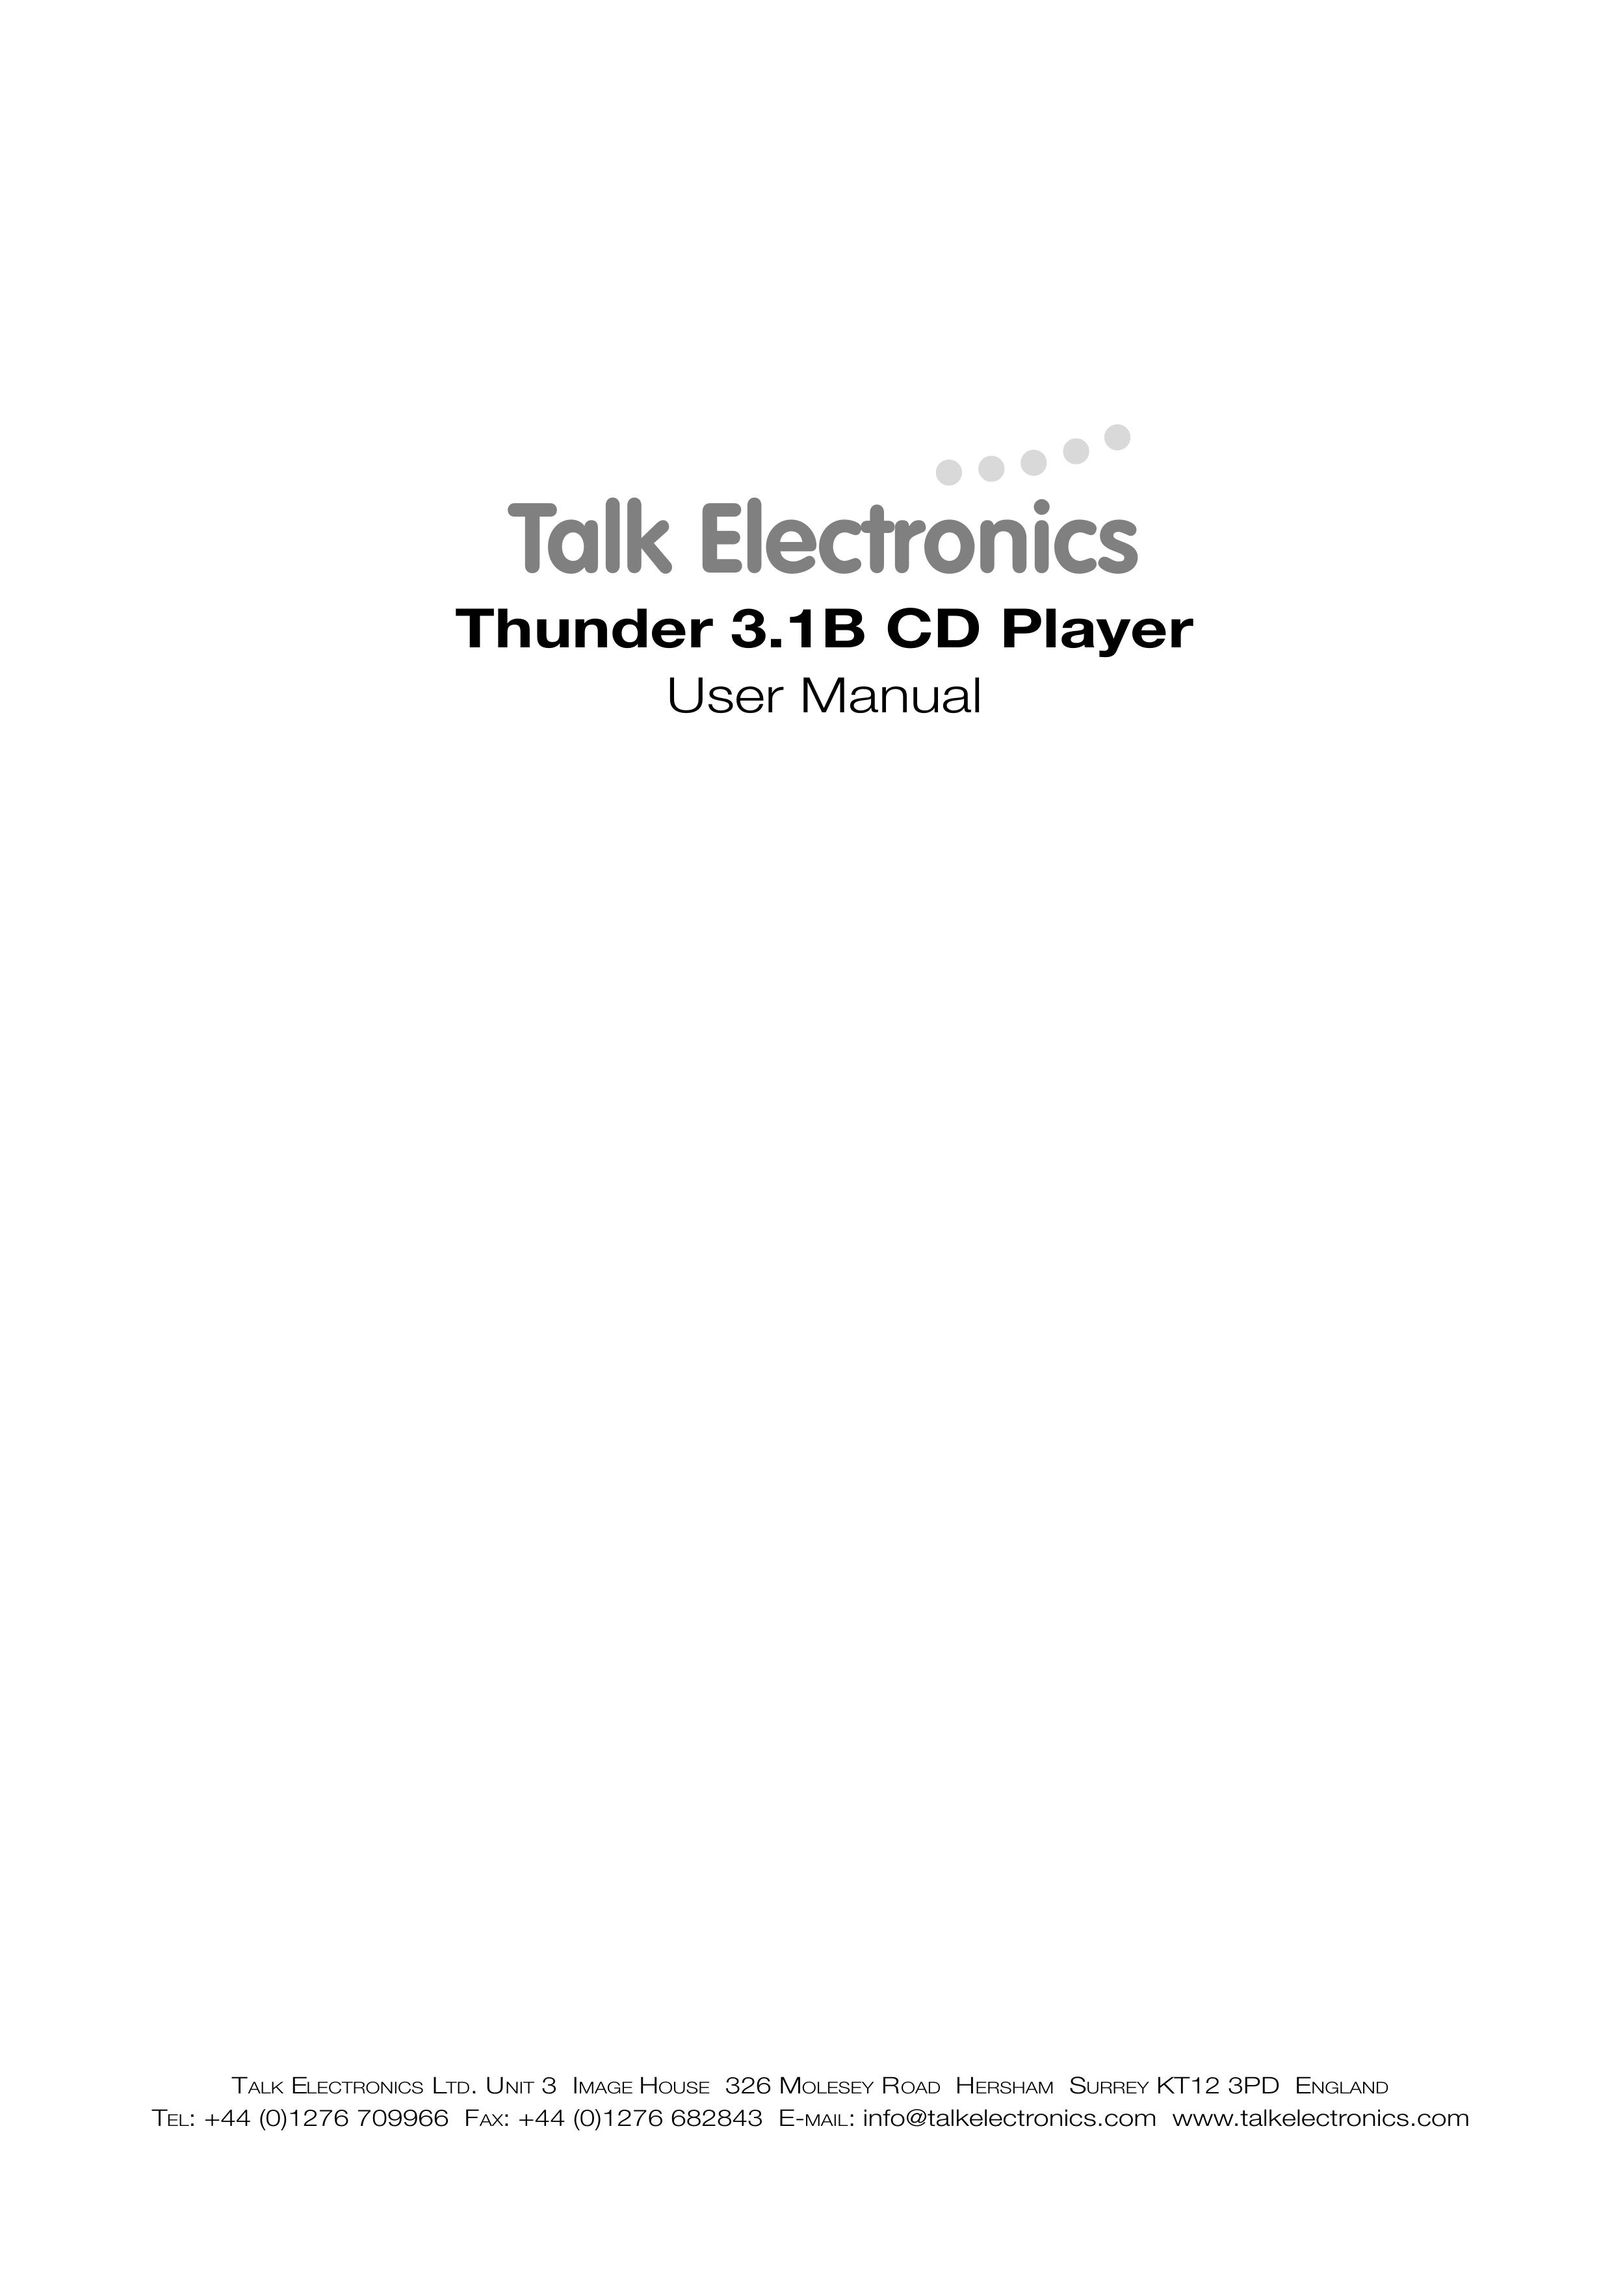 Talk electronic Thunder 3.1B CD Player User Manual